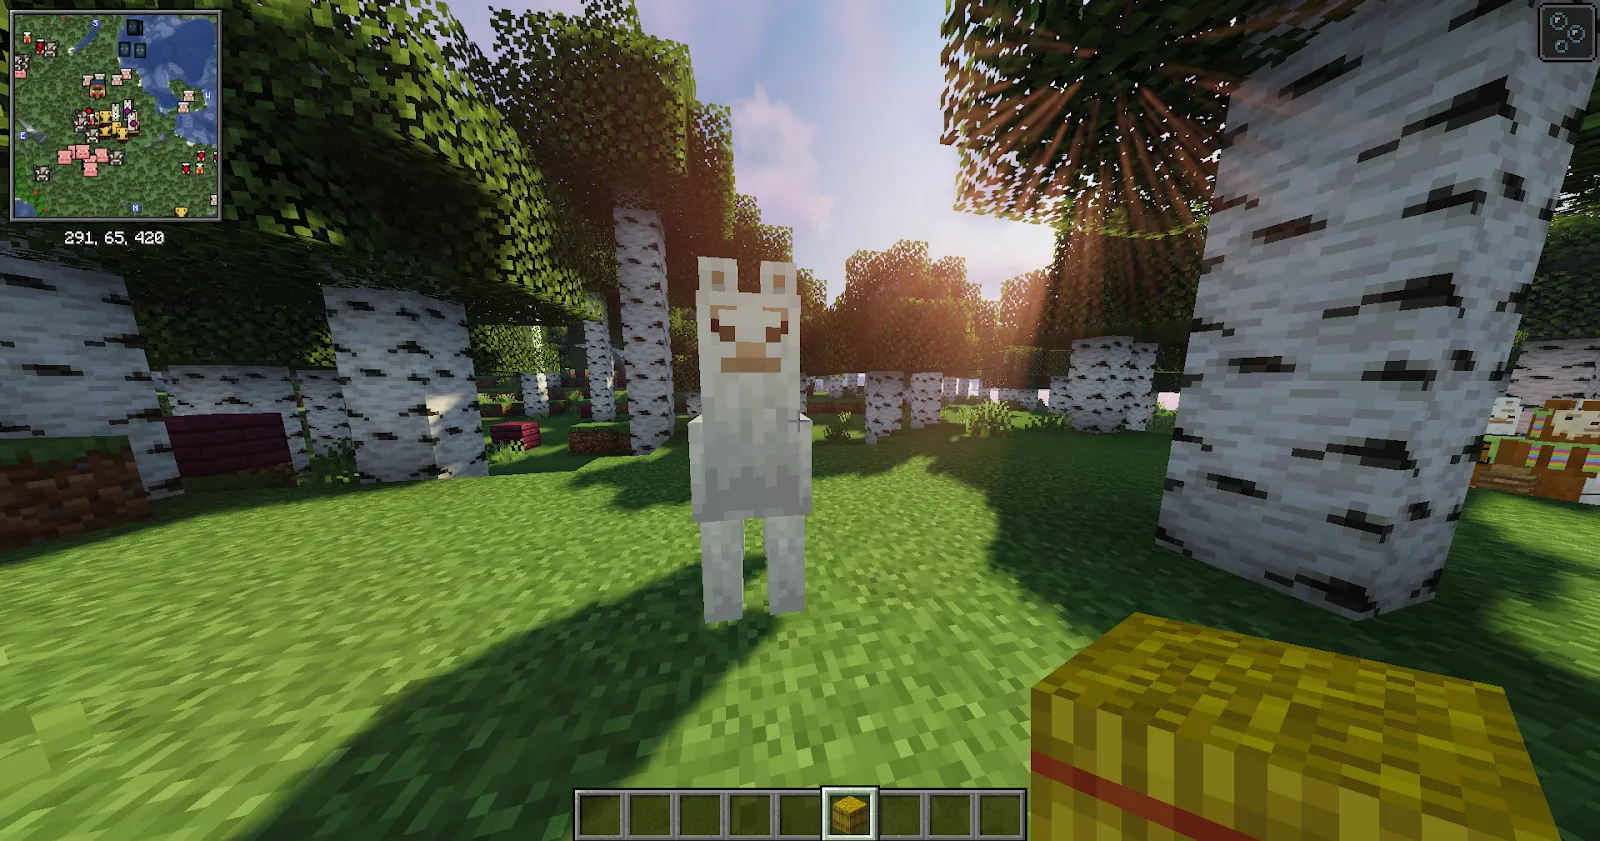 Minecraft Llama looking at character holding a Hay Bale